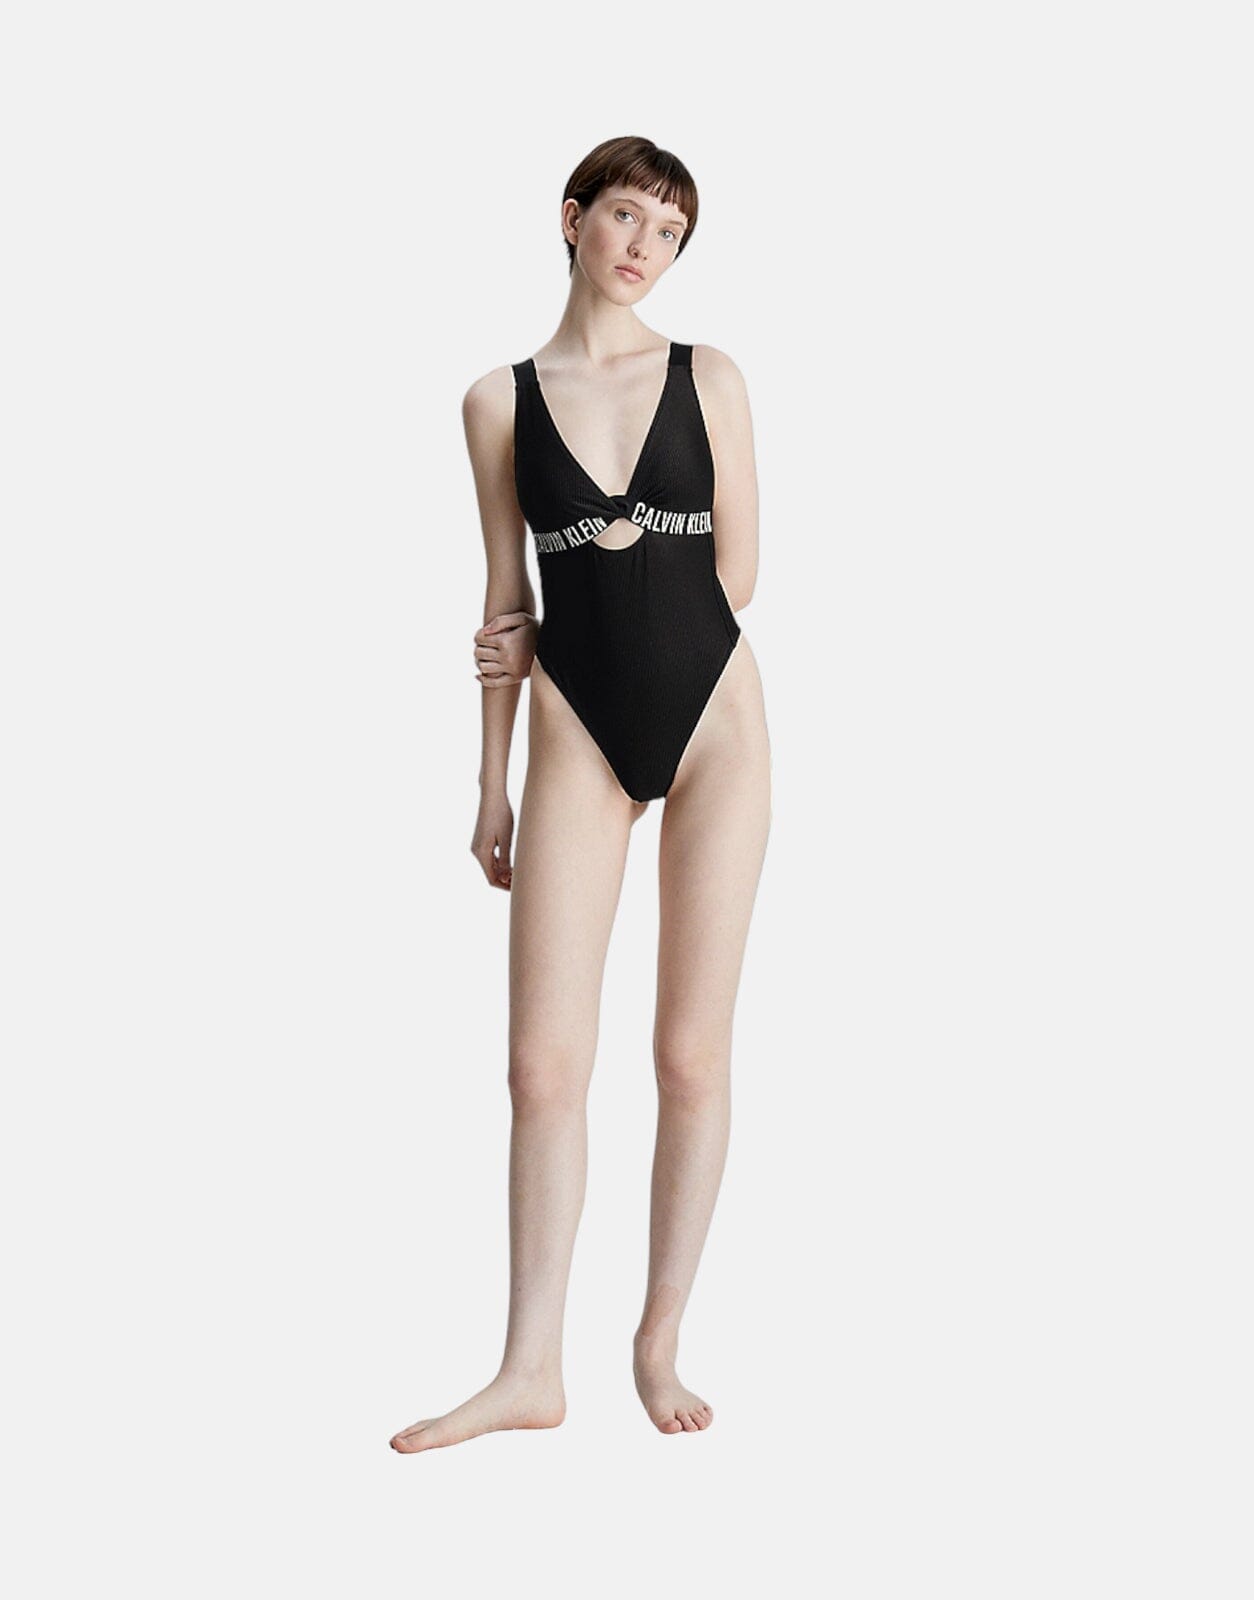 Calvin Klein Fashion Fit One Piece Swimsuit - Subwear